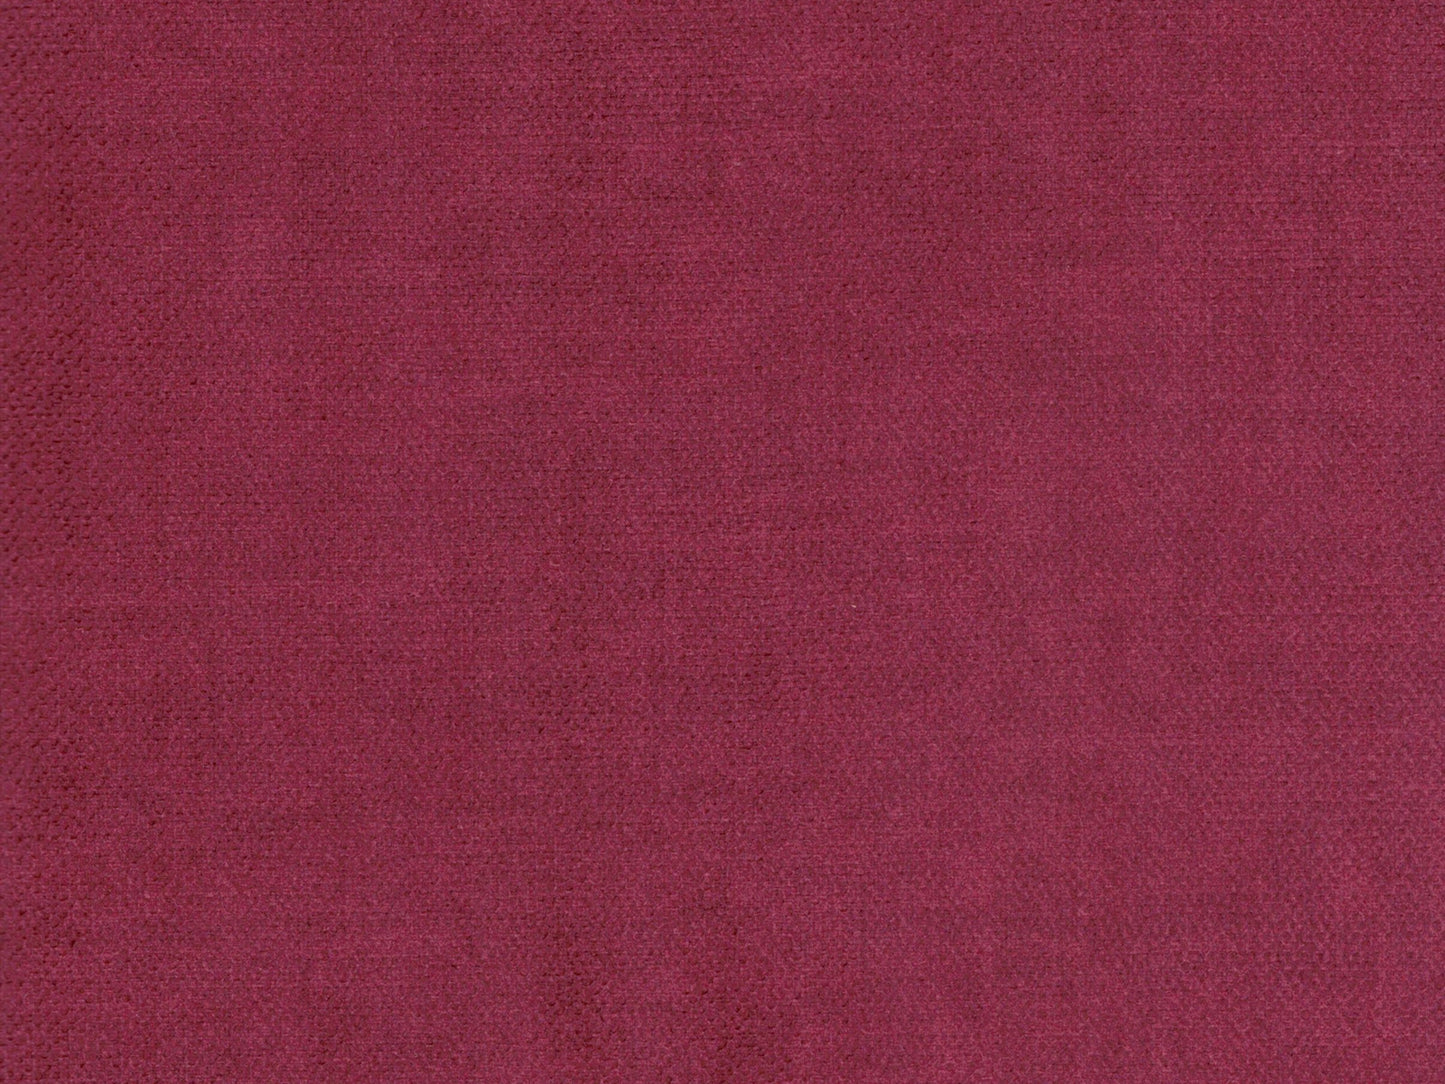 Destino Fabric Samples - Rydan Interiors